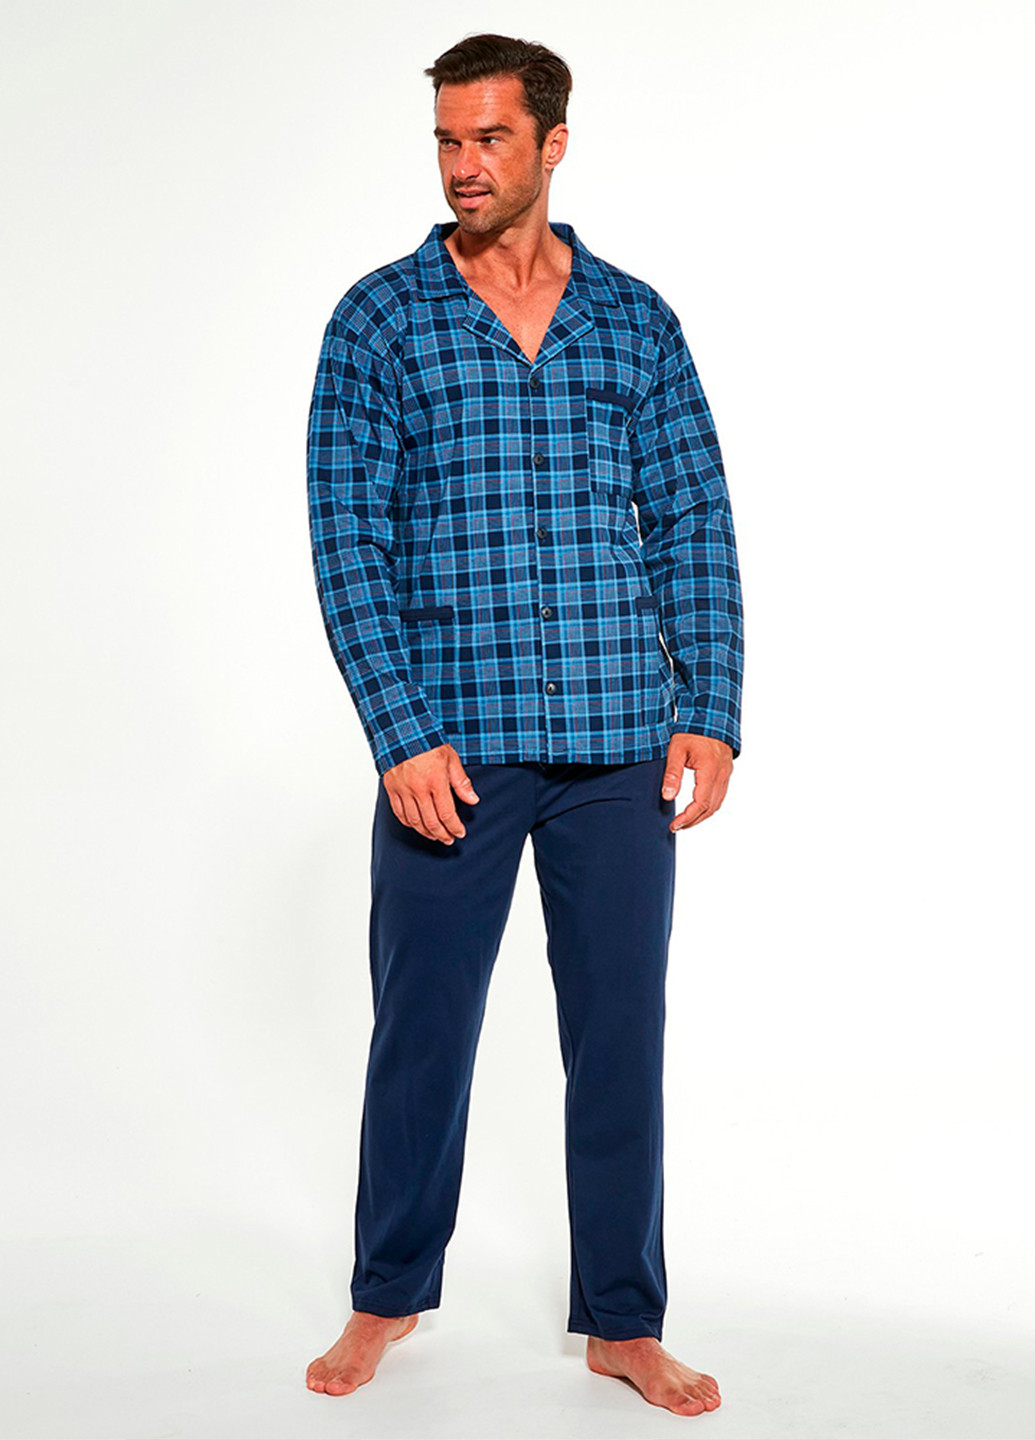 Пижама (рубашка, брюки) Cornette рубашка + брюки клетка синяя домашняя хлопок